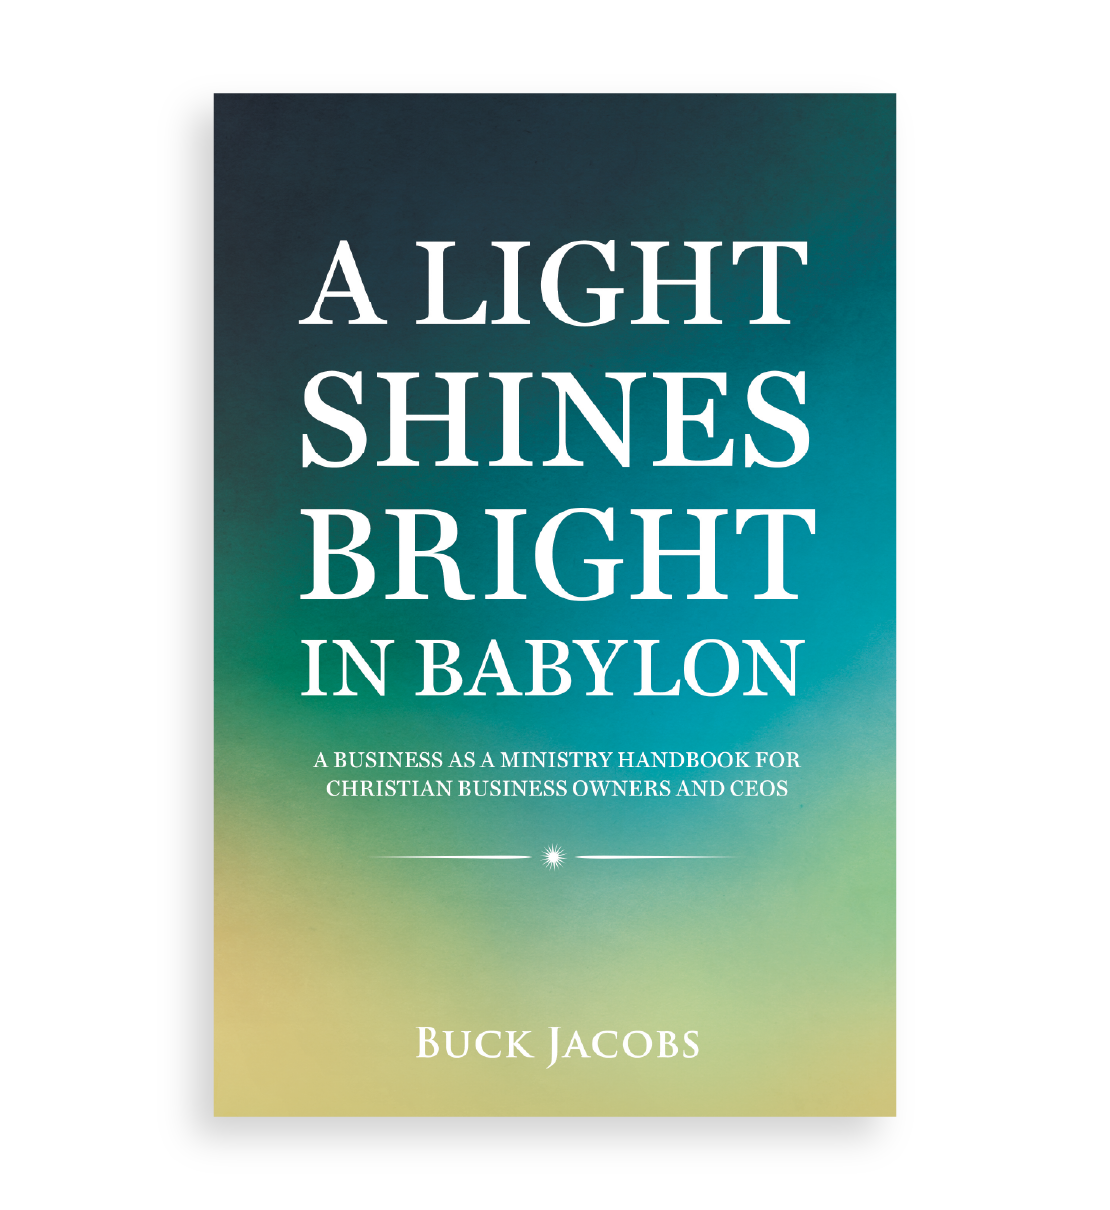 A Light Shines Bright In Babylon